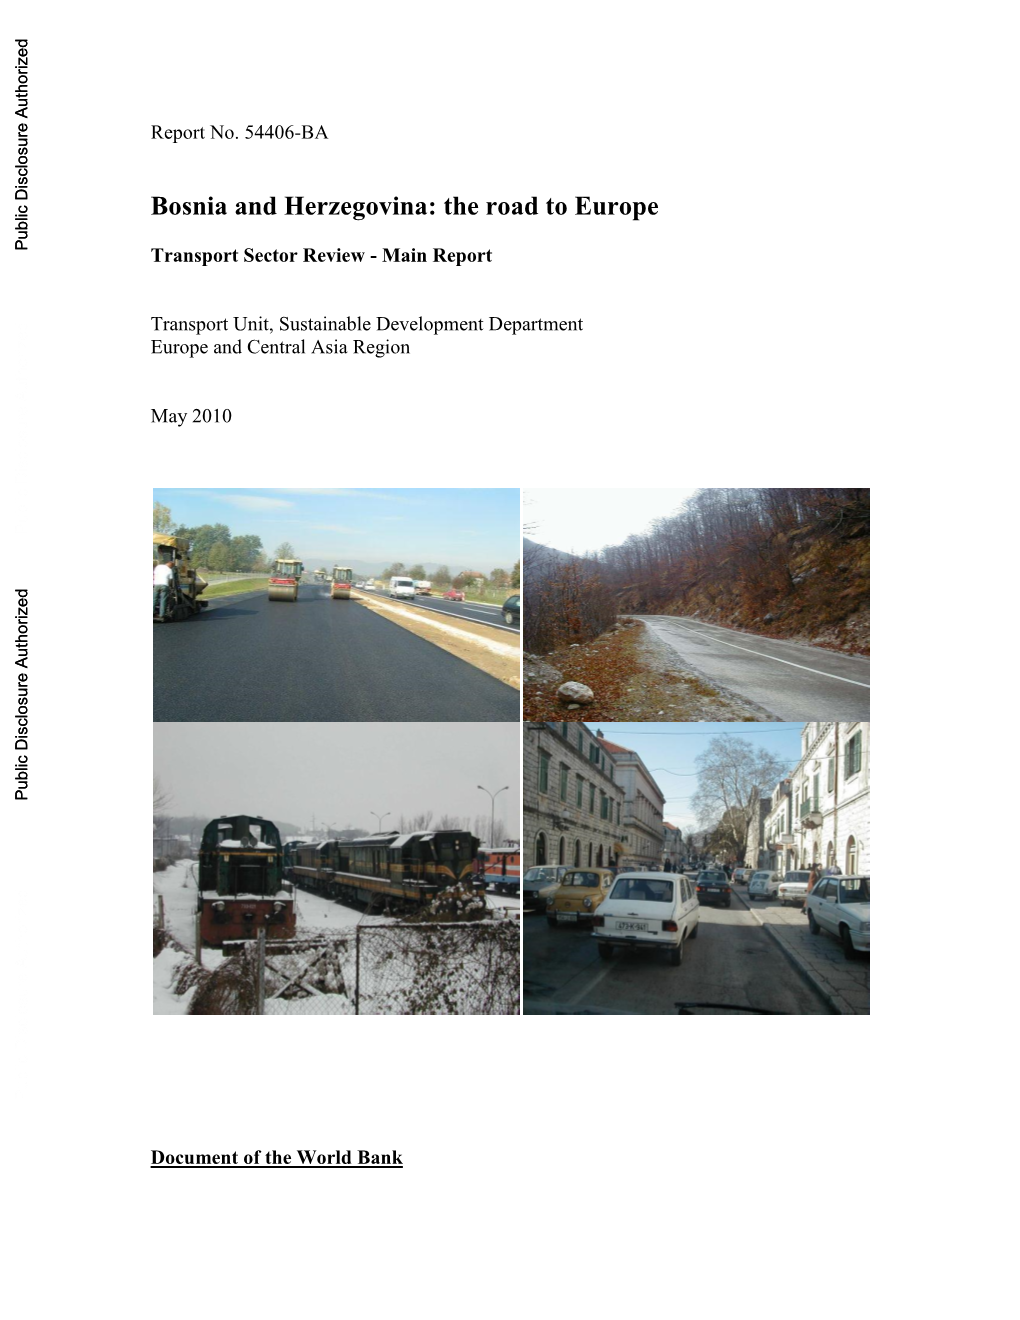 Bosnia and Herzegovina: the Road to Europe